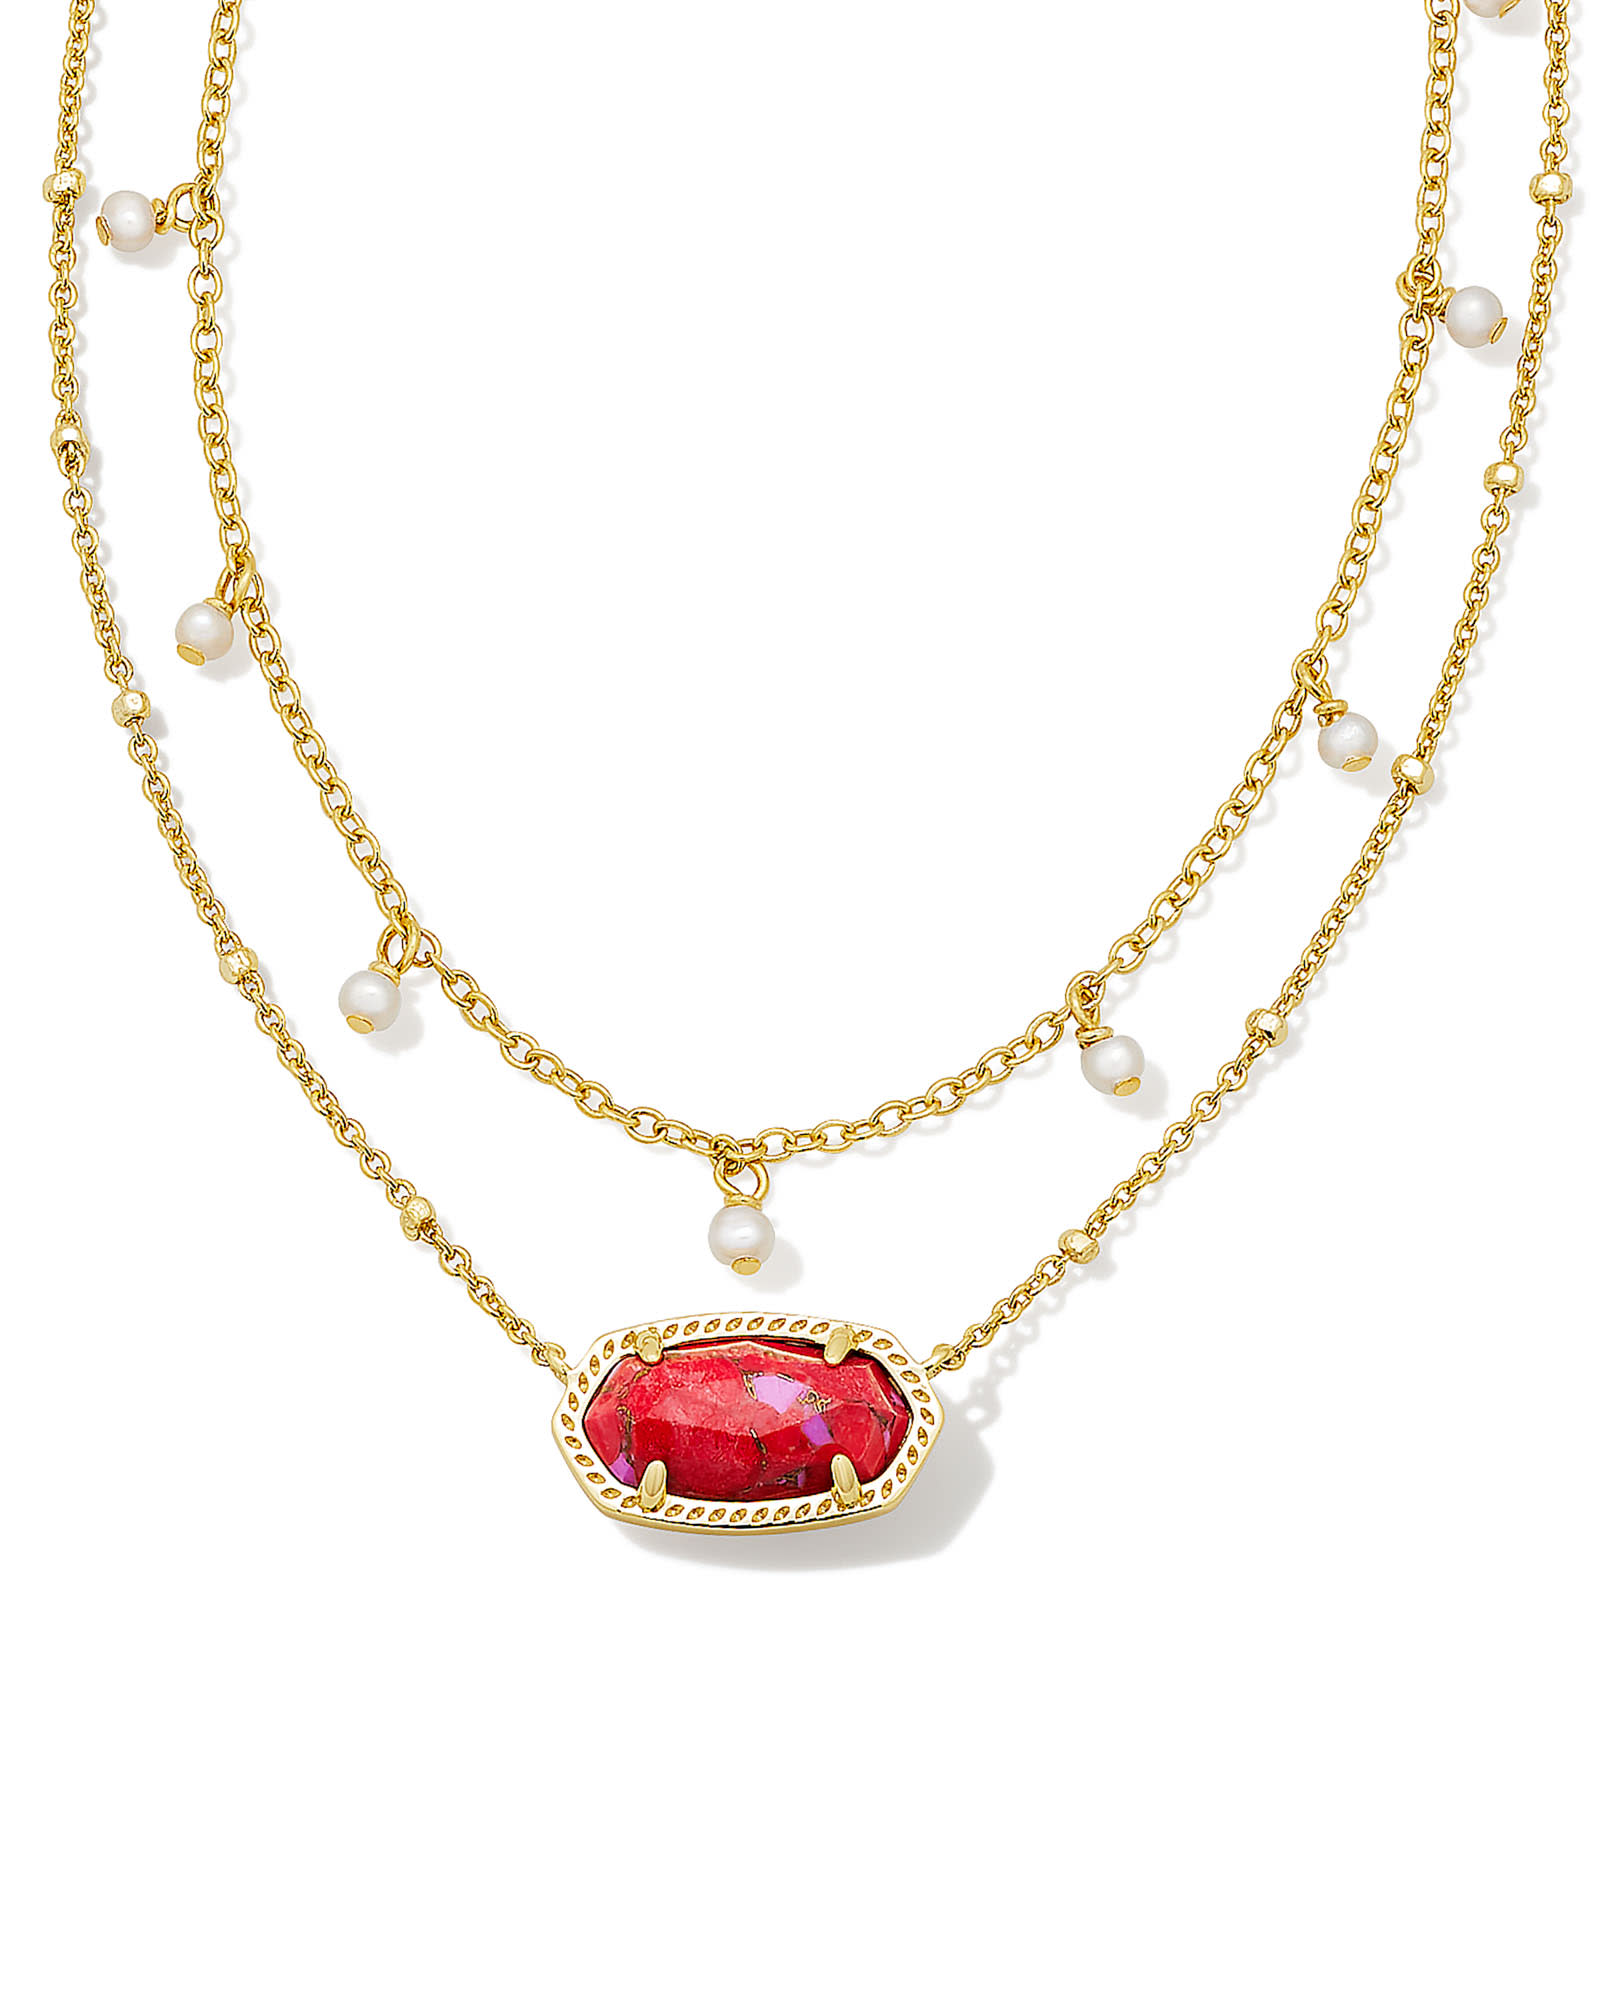 Ari Heart Multi Strand Necklace in Rose Gold